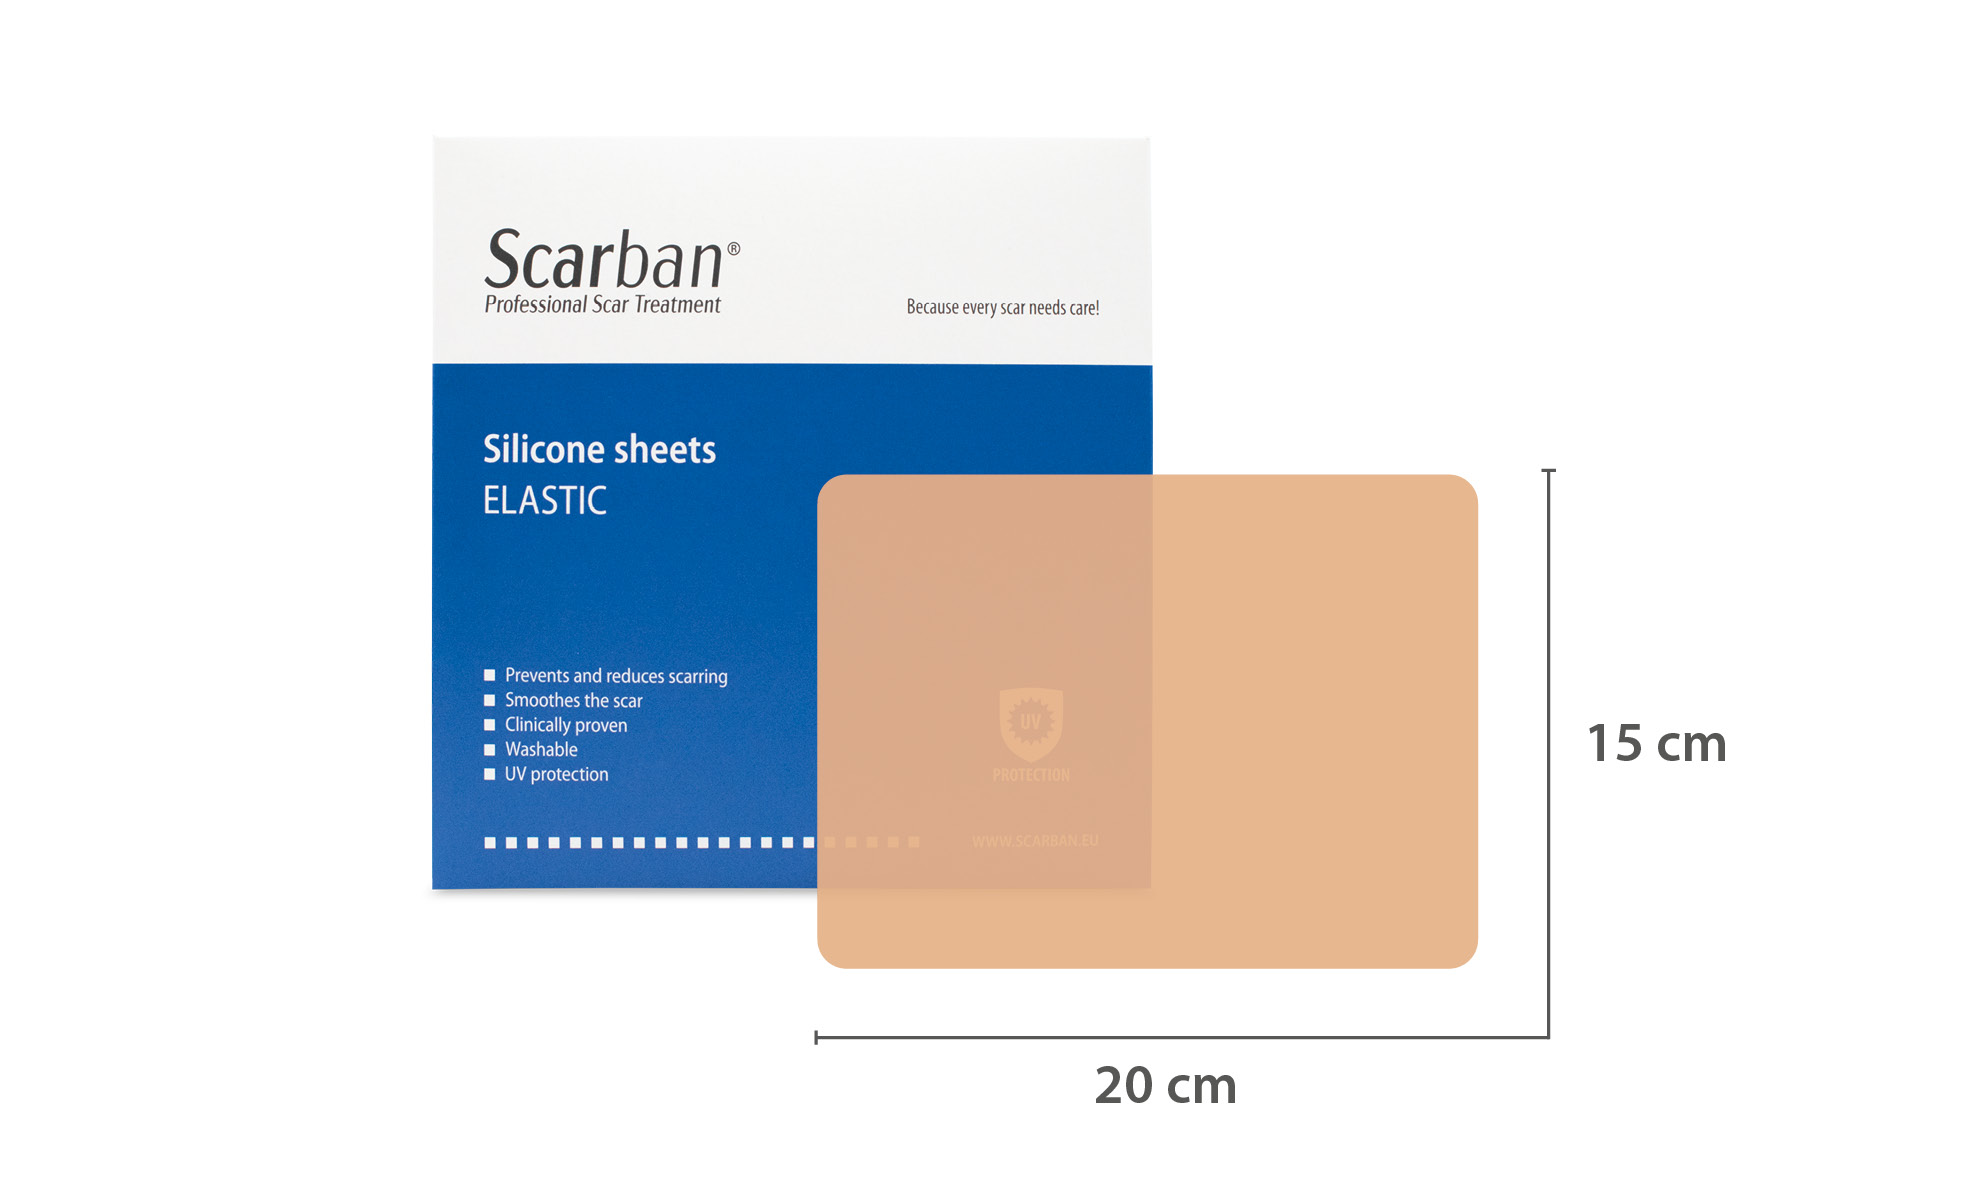 Plasturi cu silicon - Plasture elastic cu silicon Scarban 15x20 cm, lavabil * 1 bucata, clinicafarm.ro